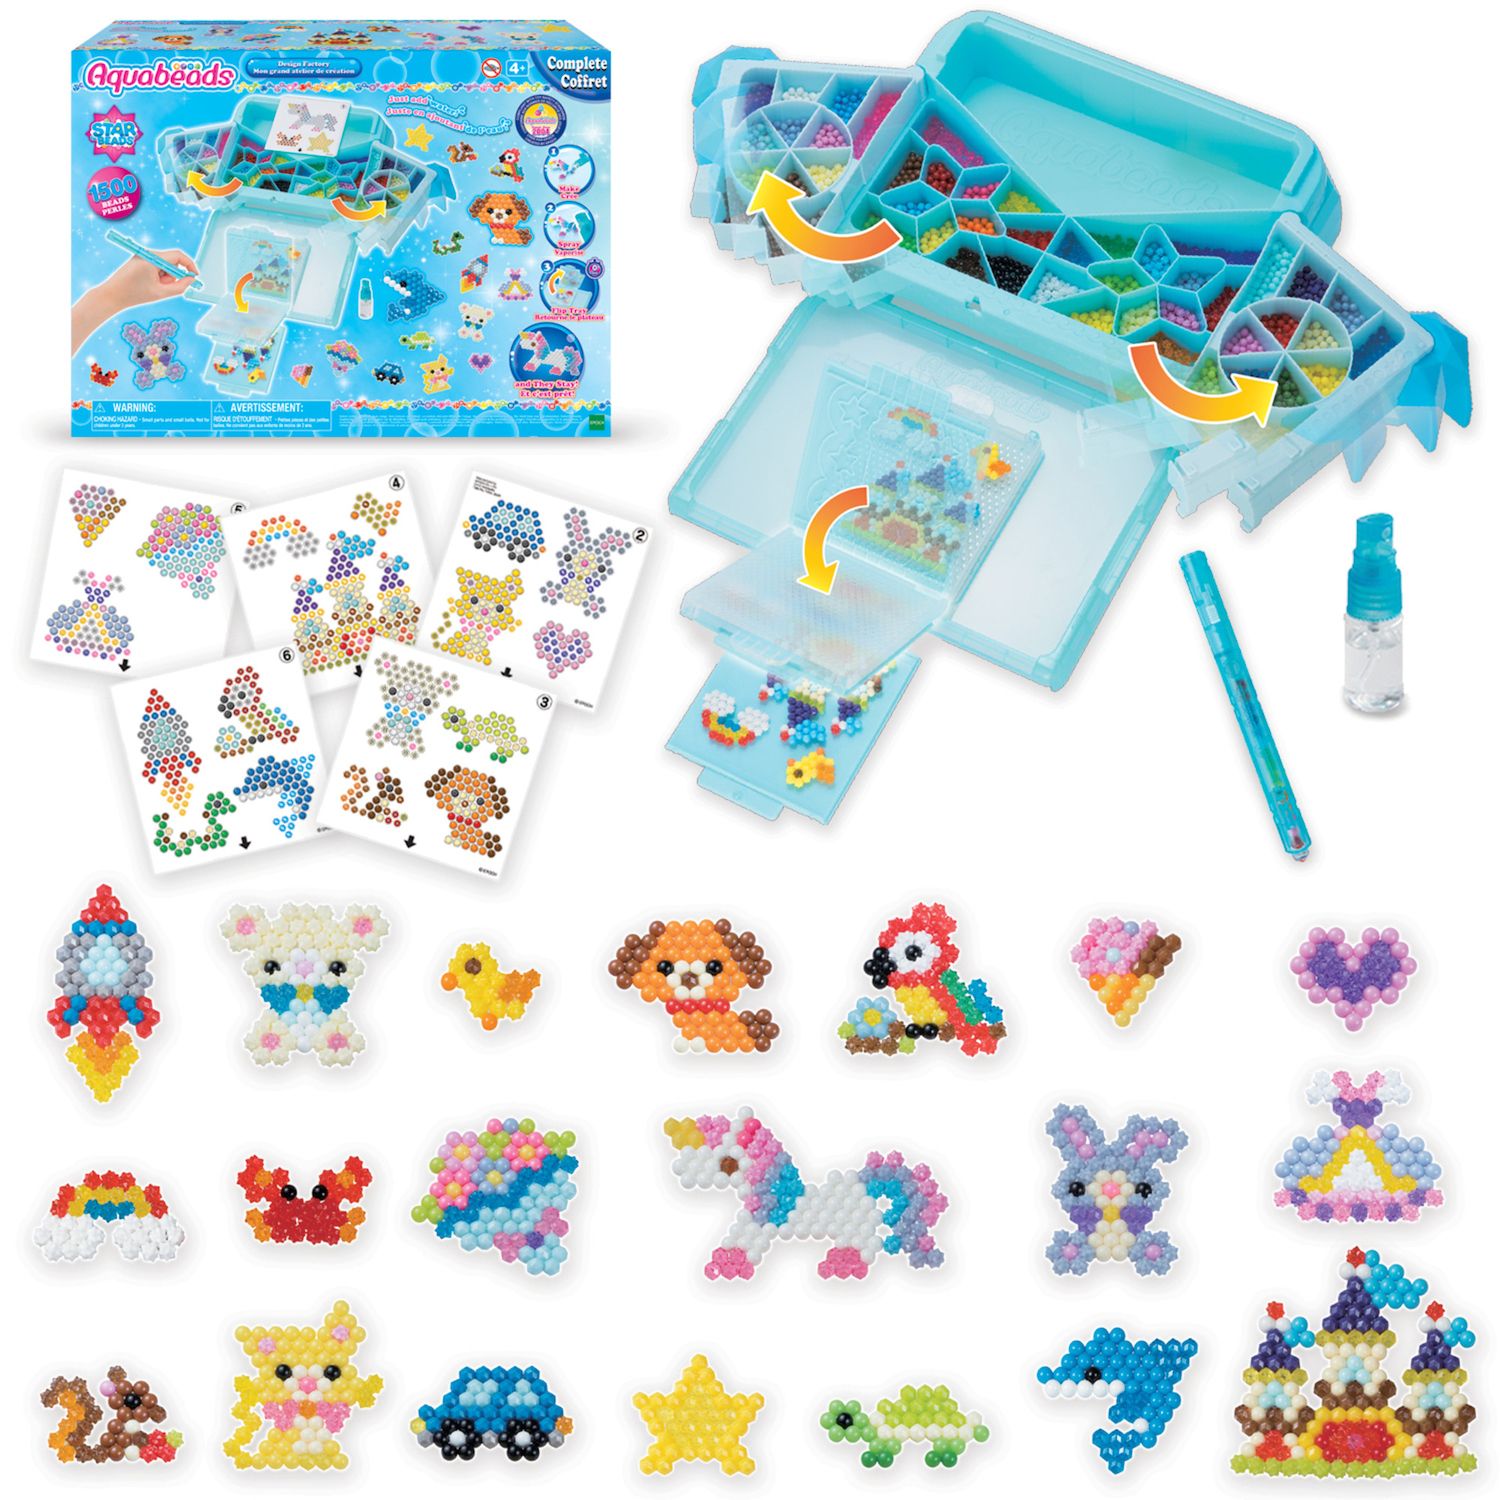 Aquabeads Disney Princess Creation Cube, Complete Arts & Crafts